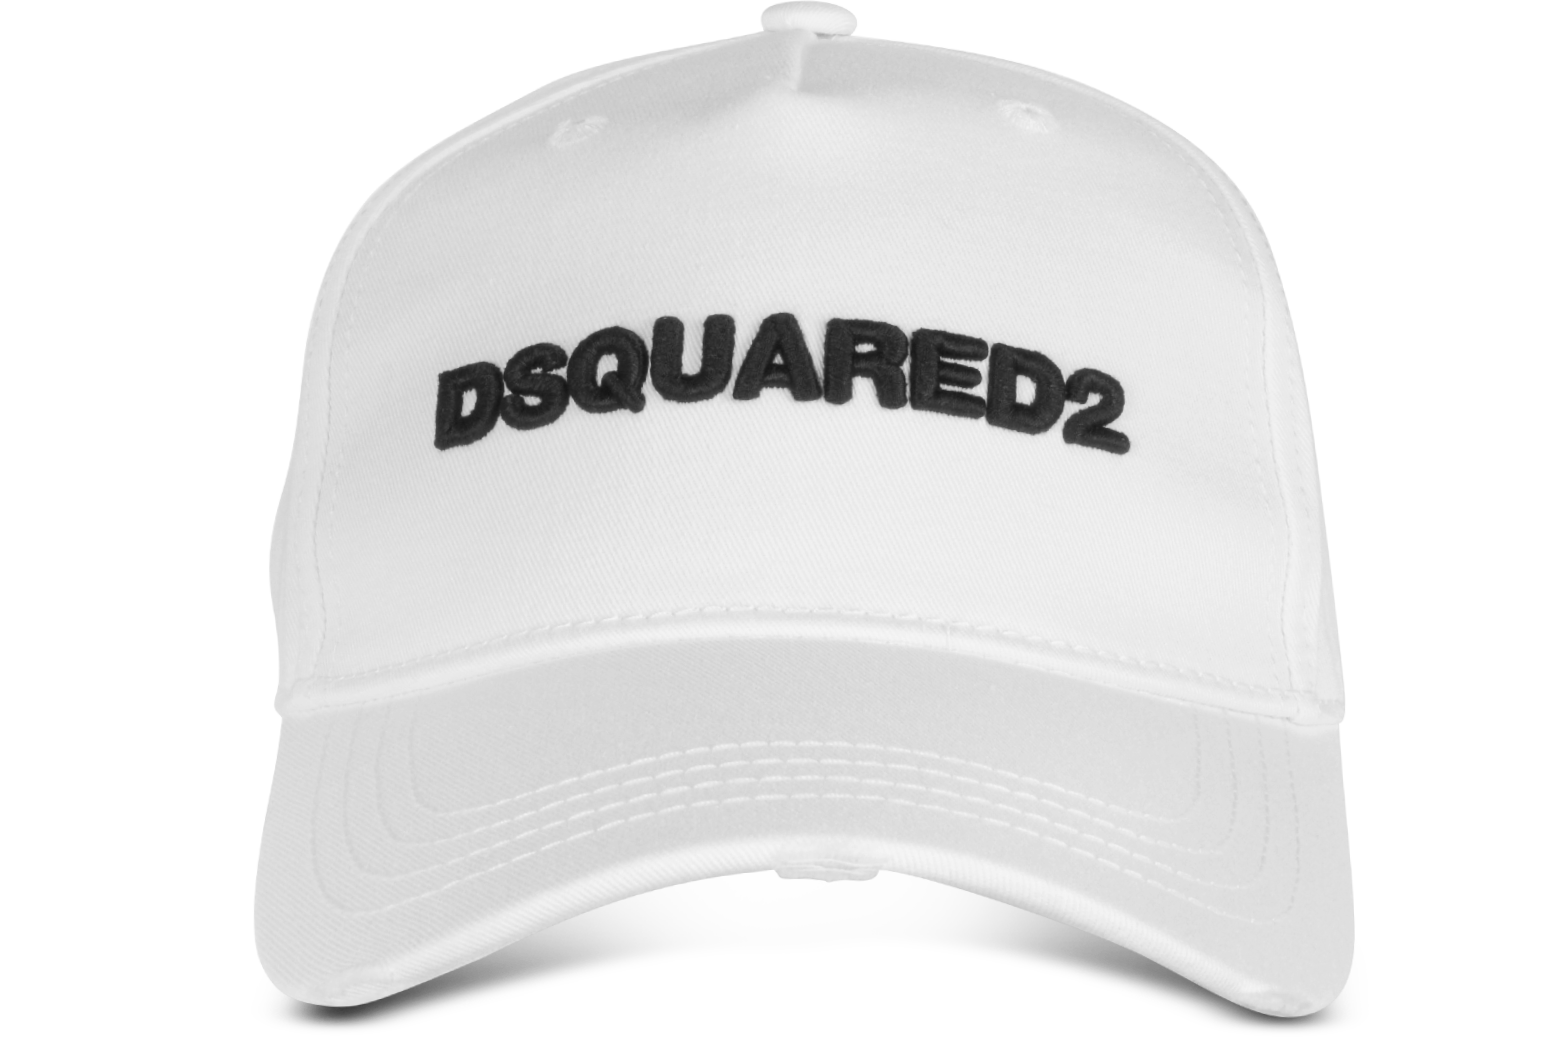 dsquared white cap